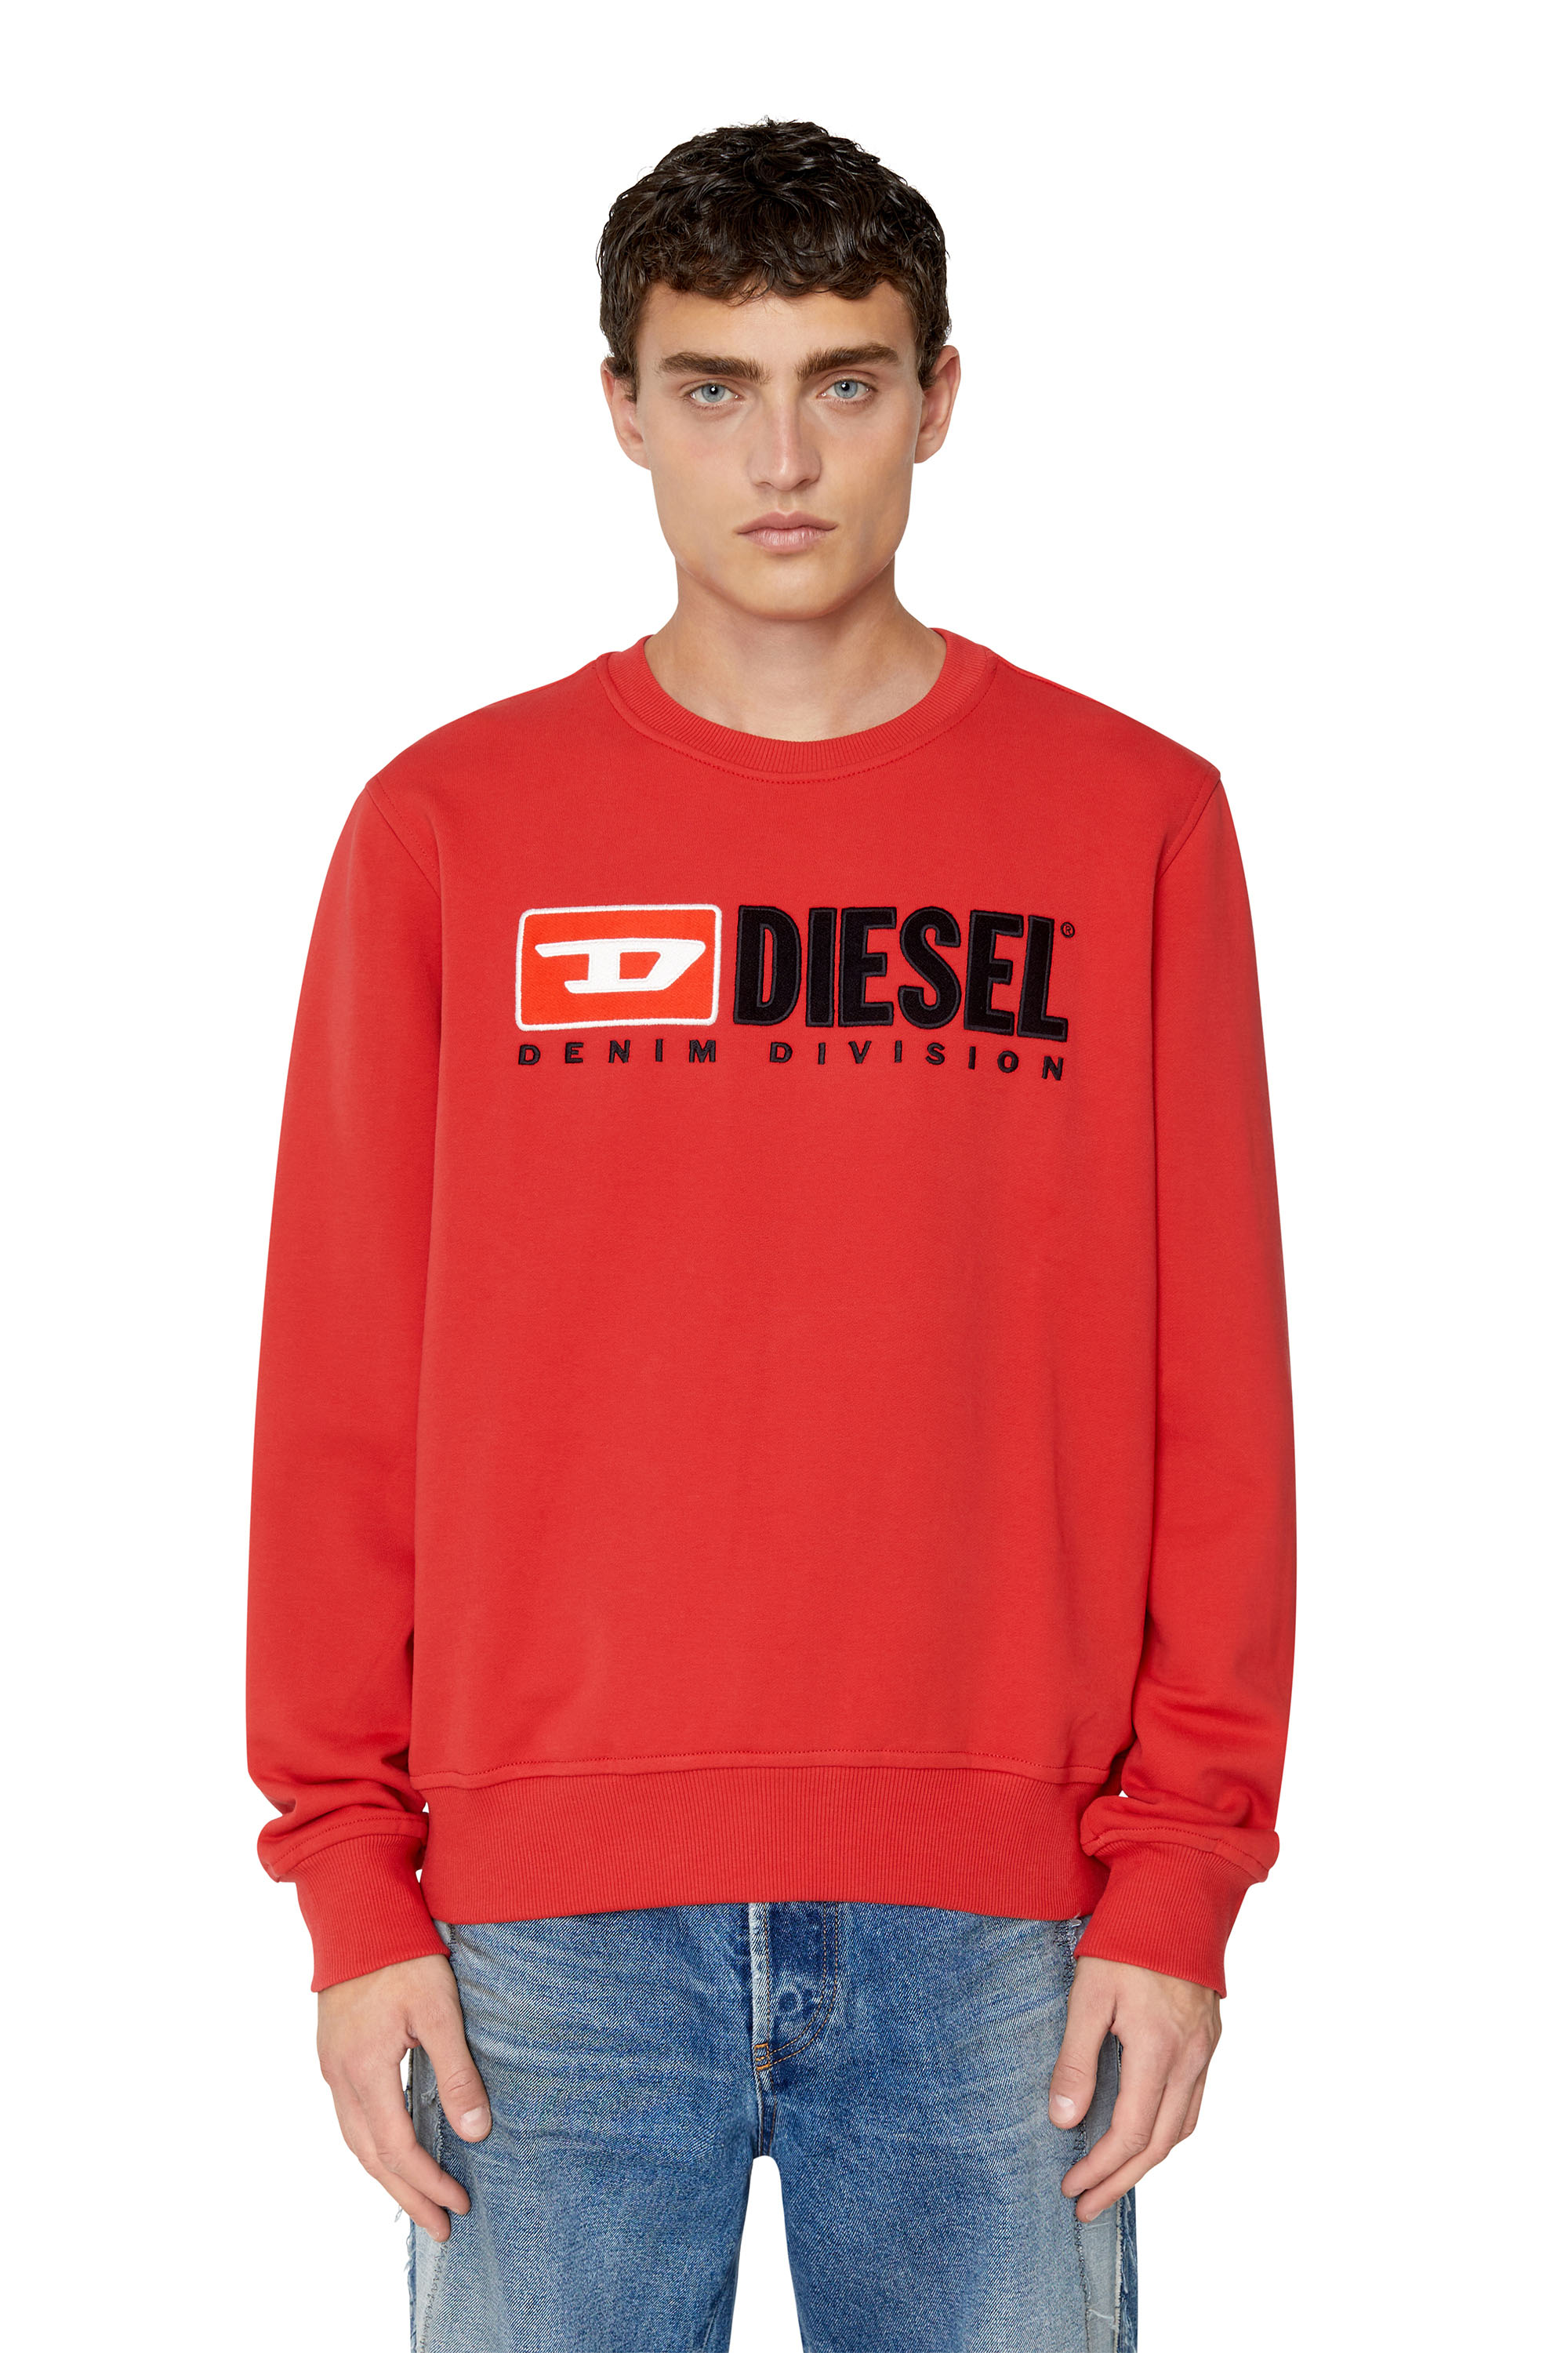 Diesel - S-GINN-DIV, Red - Image 1